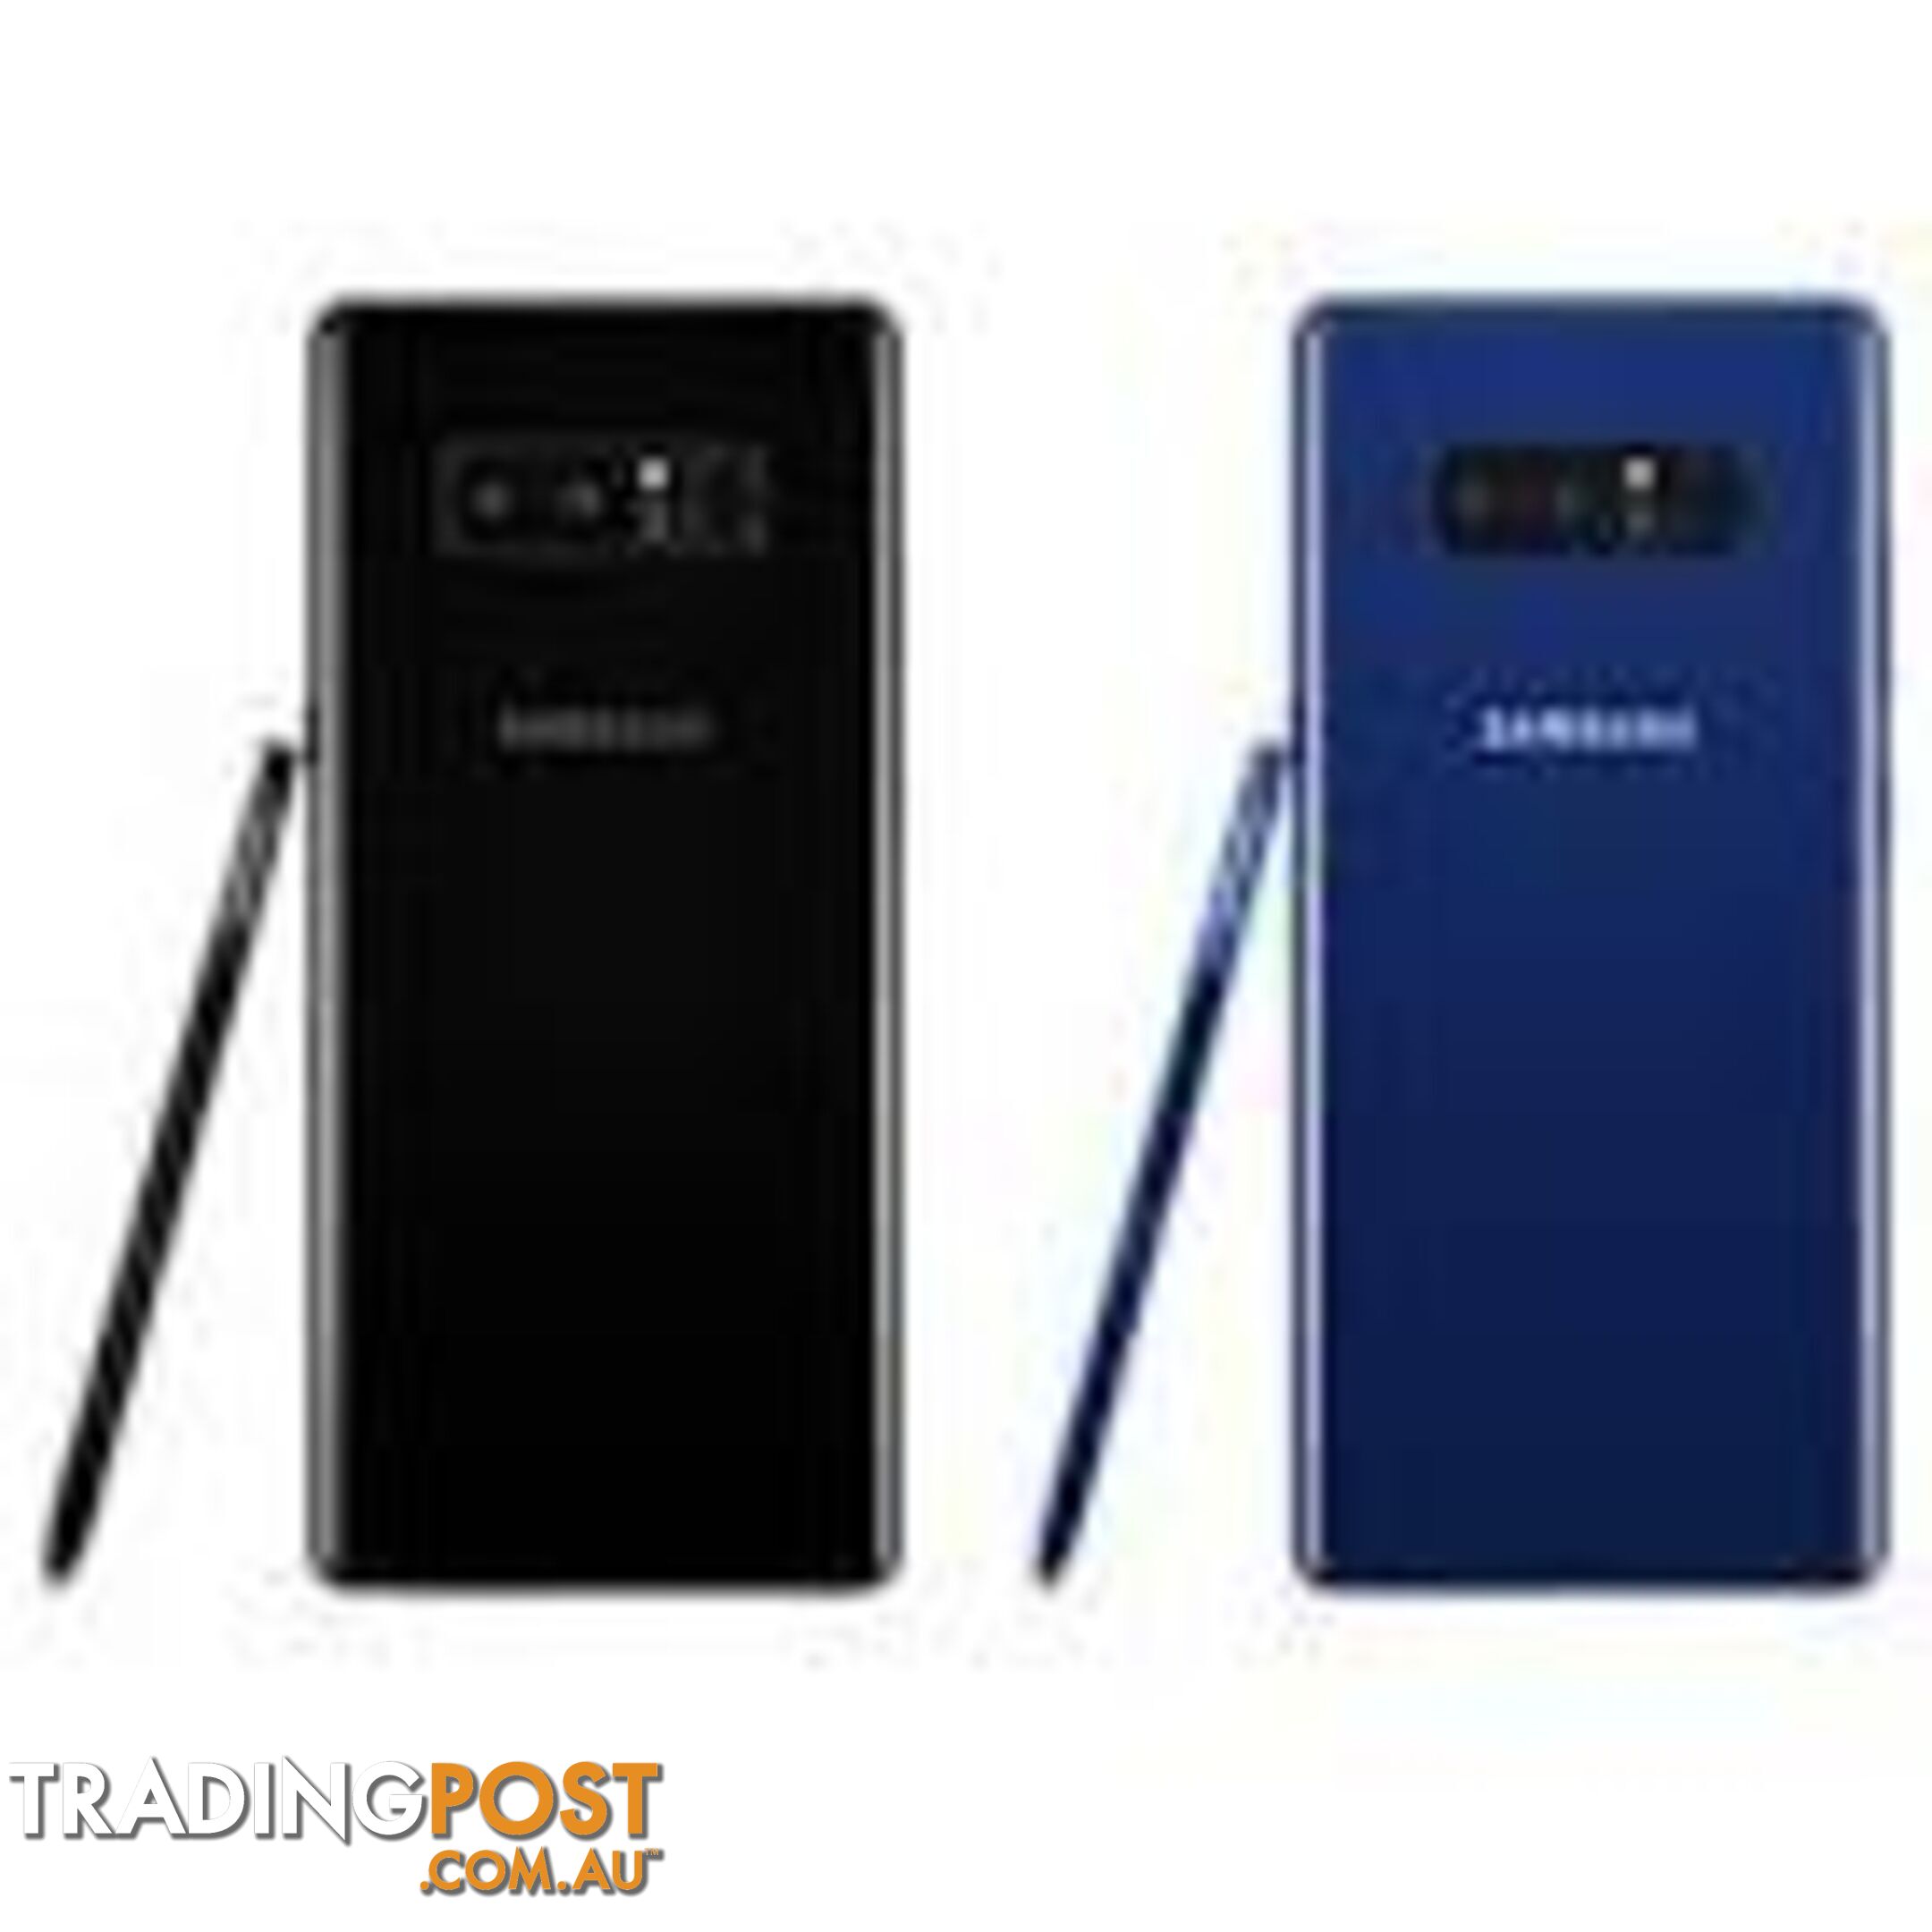 Samsung Galaxy Note 8 (Refurbished) - 1001526 - mobile phone